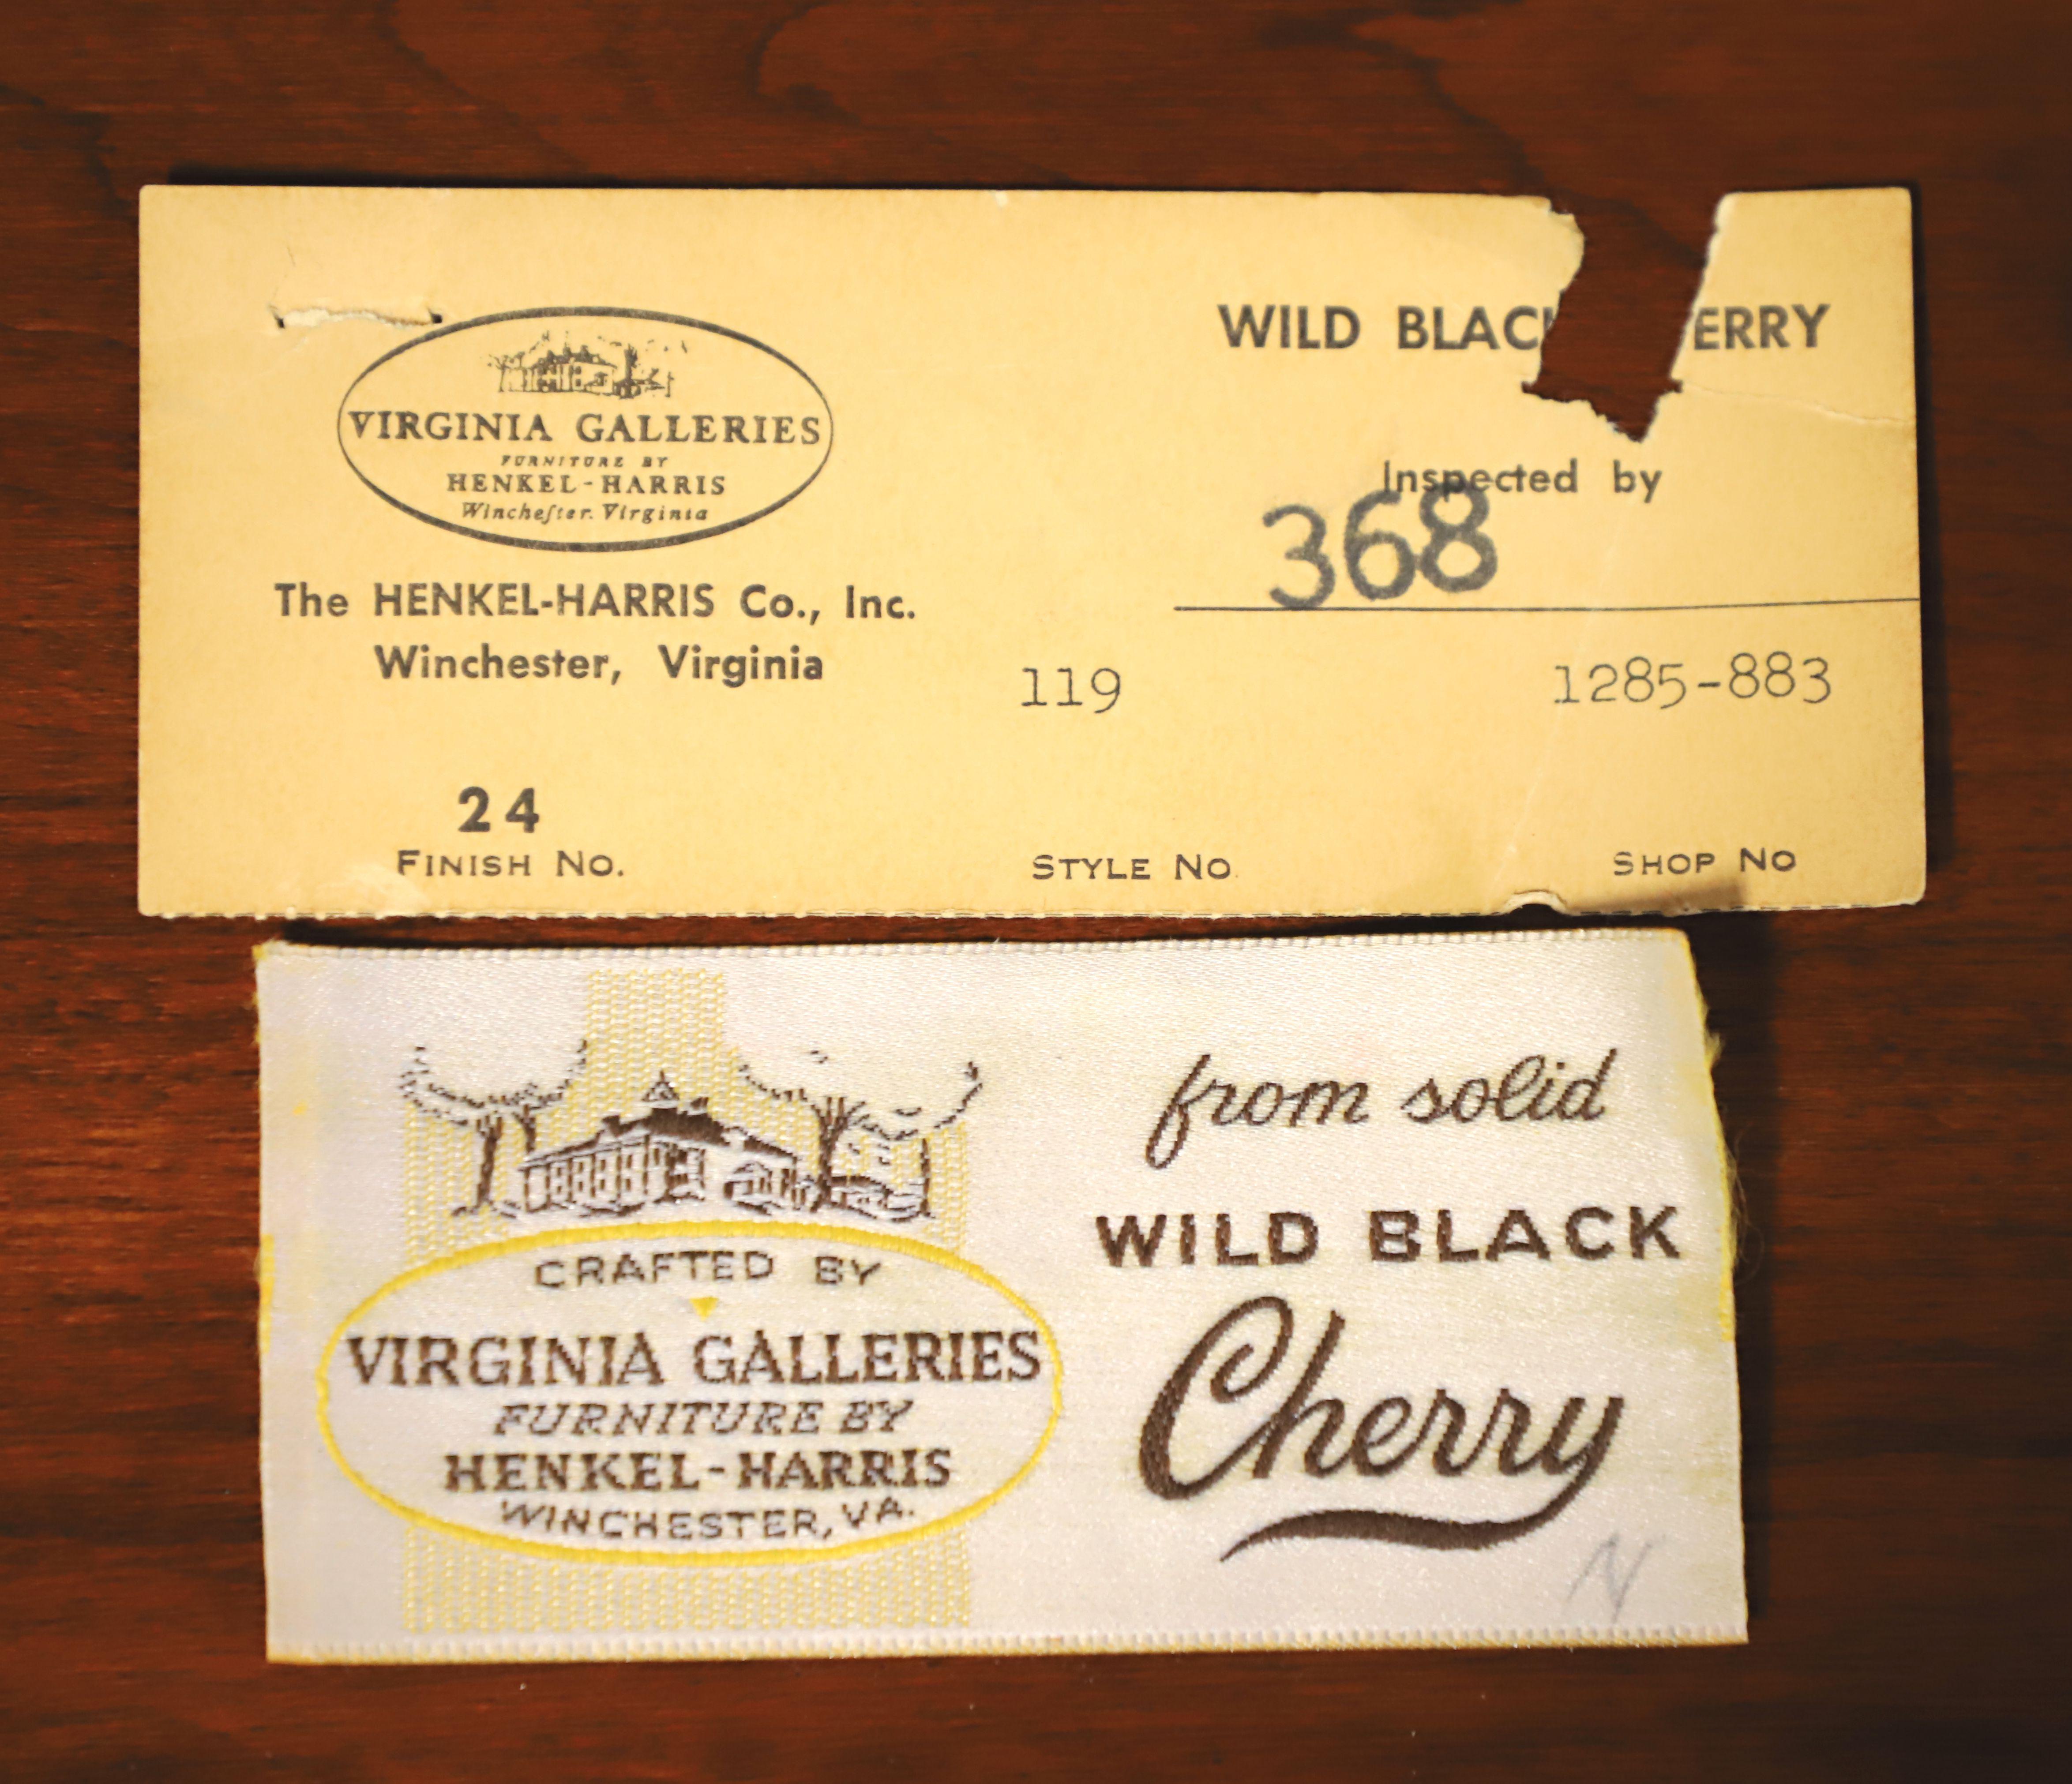 HENKEL HARRIS 141 24 Solid Wild Black Cherry Queen Anne End Side Table - A 4